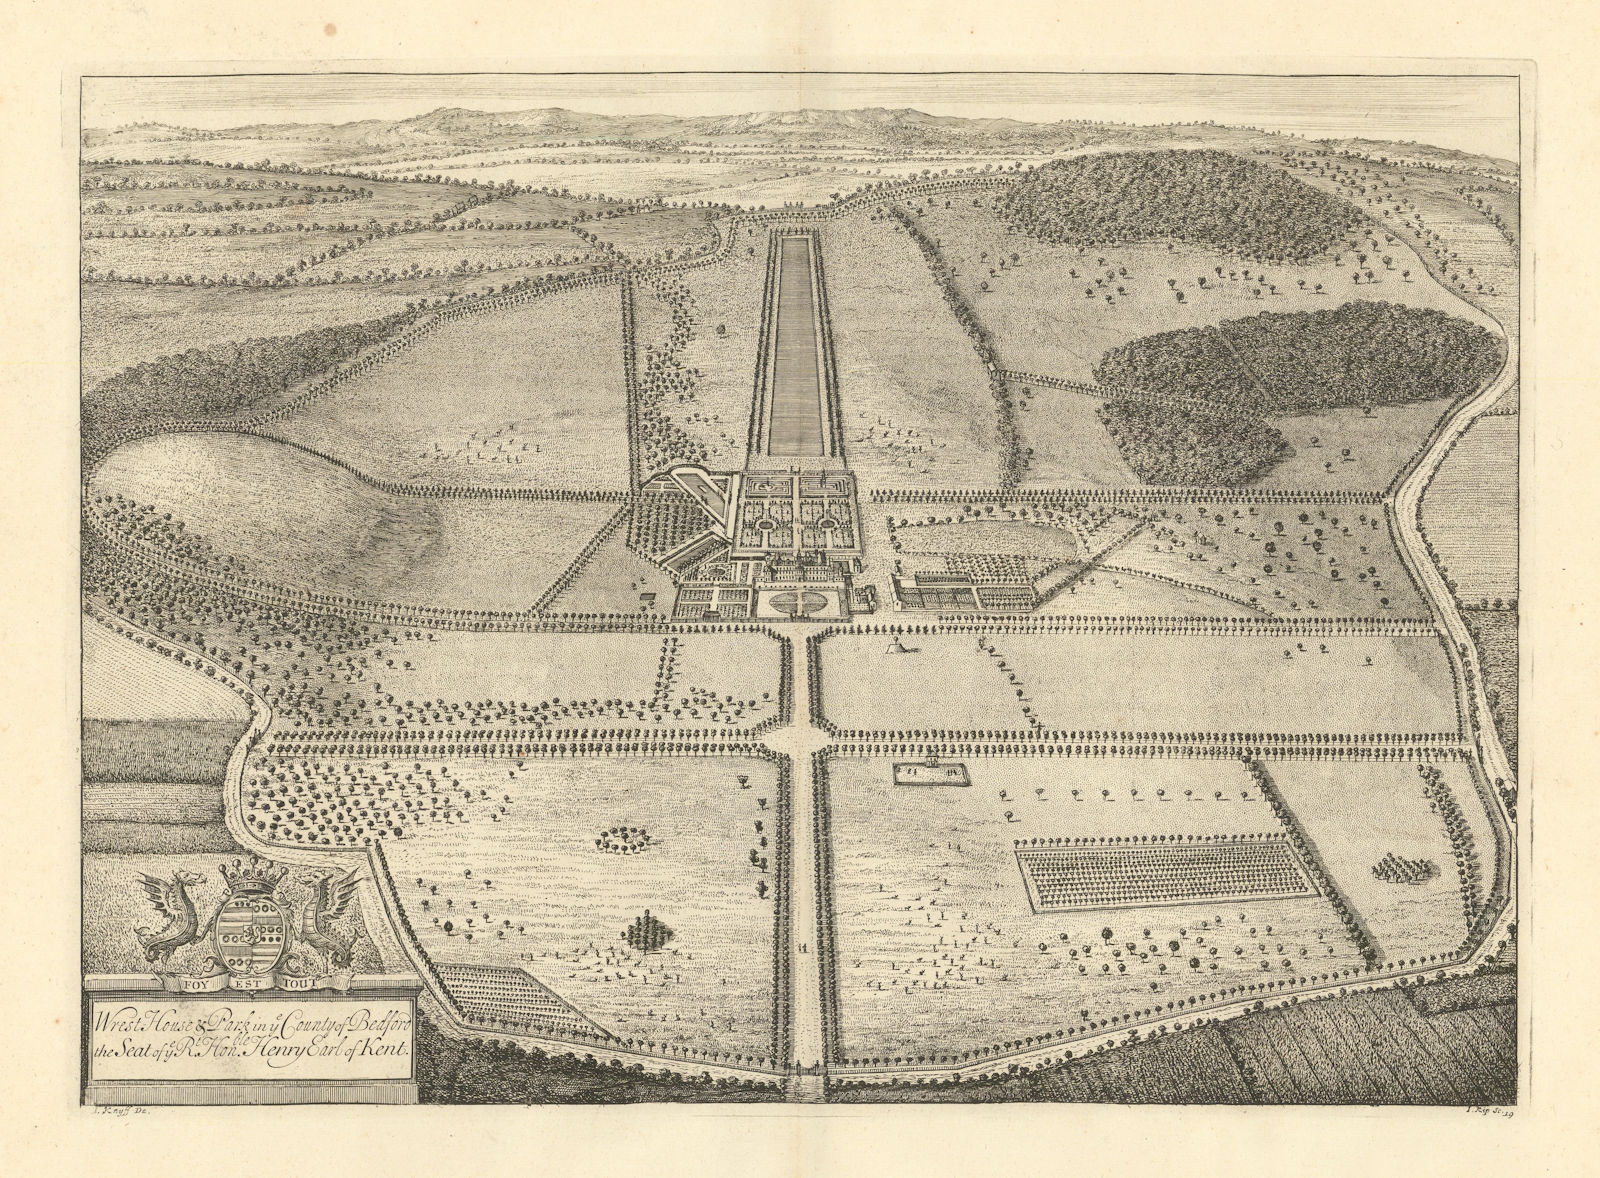 Associate Product Wrest Park, Silsoe, Bedfordshire by Kip & Knyff. "Wrest House & Park" 1709